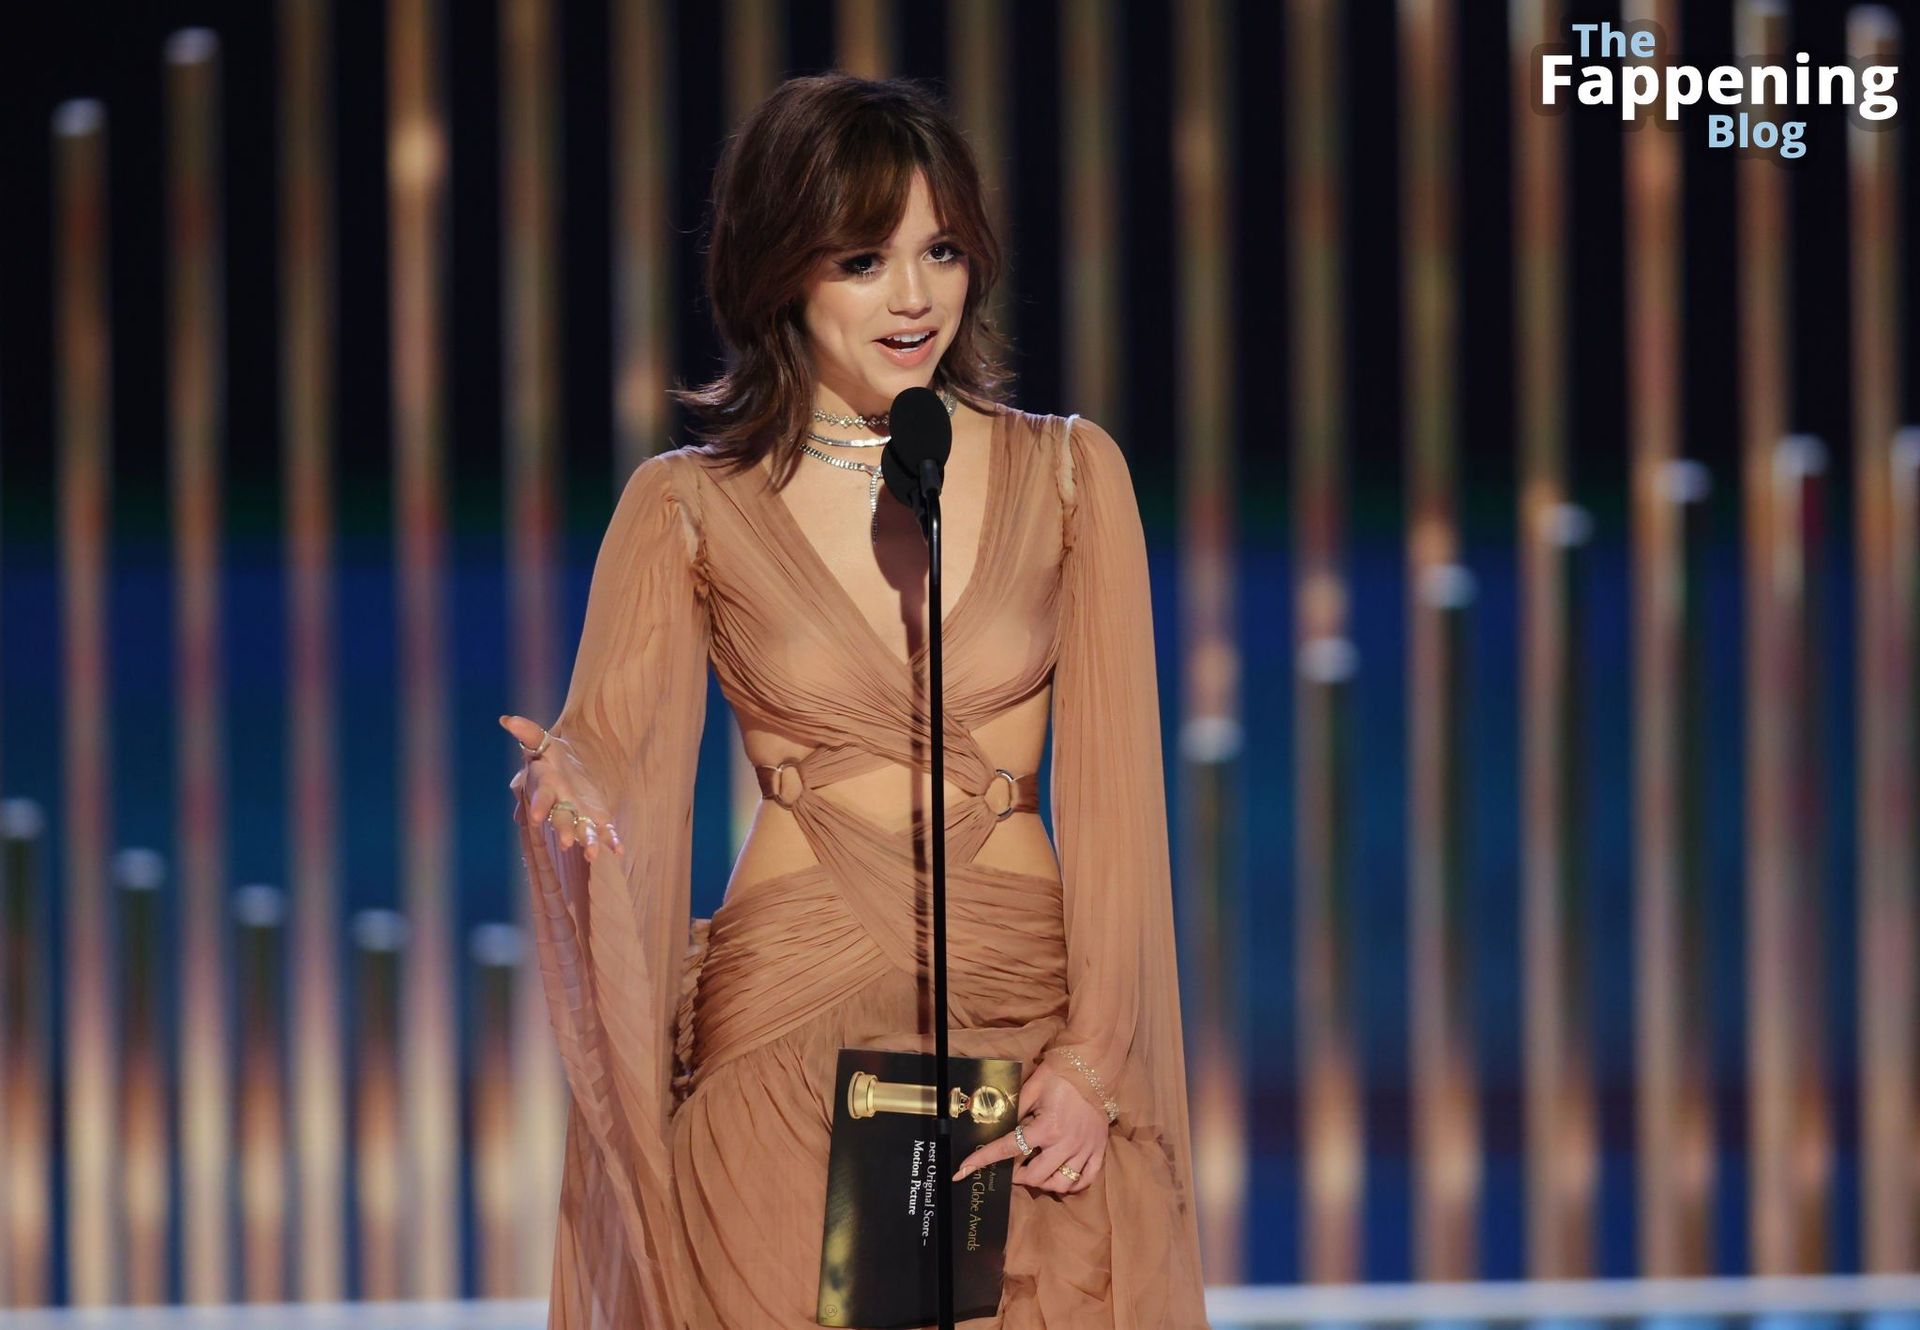 Jenna Ortega Looks Stunning At The Th Annual Golden Globe Awards